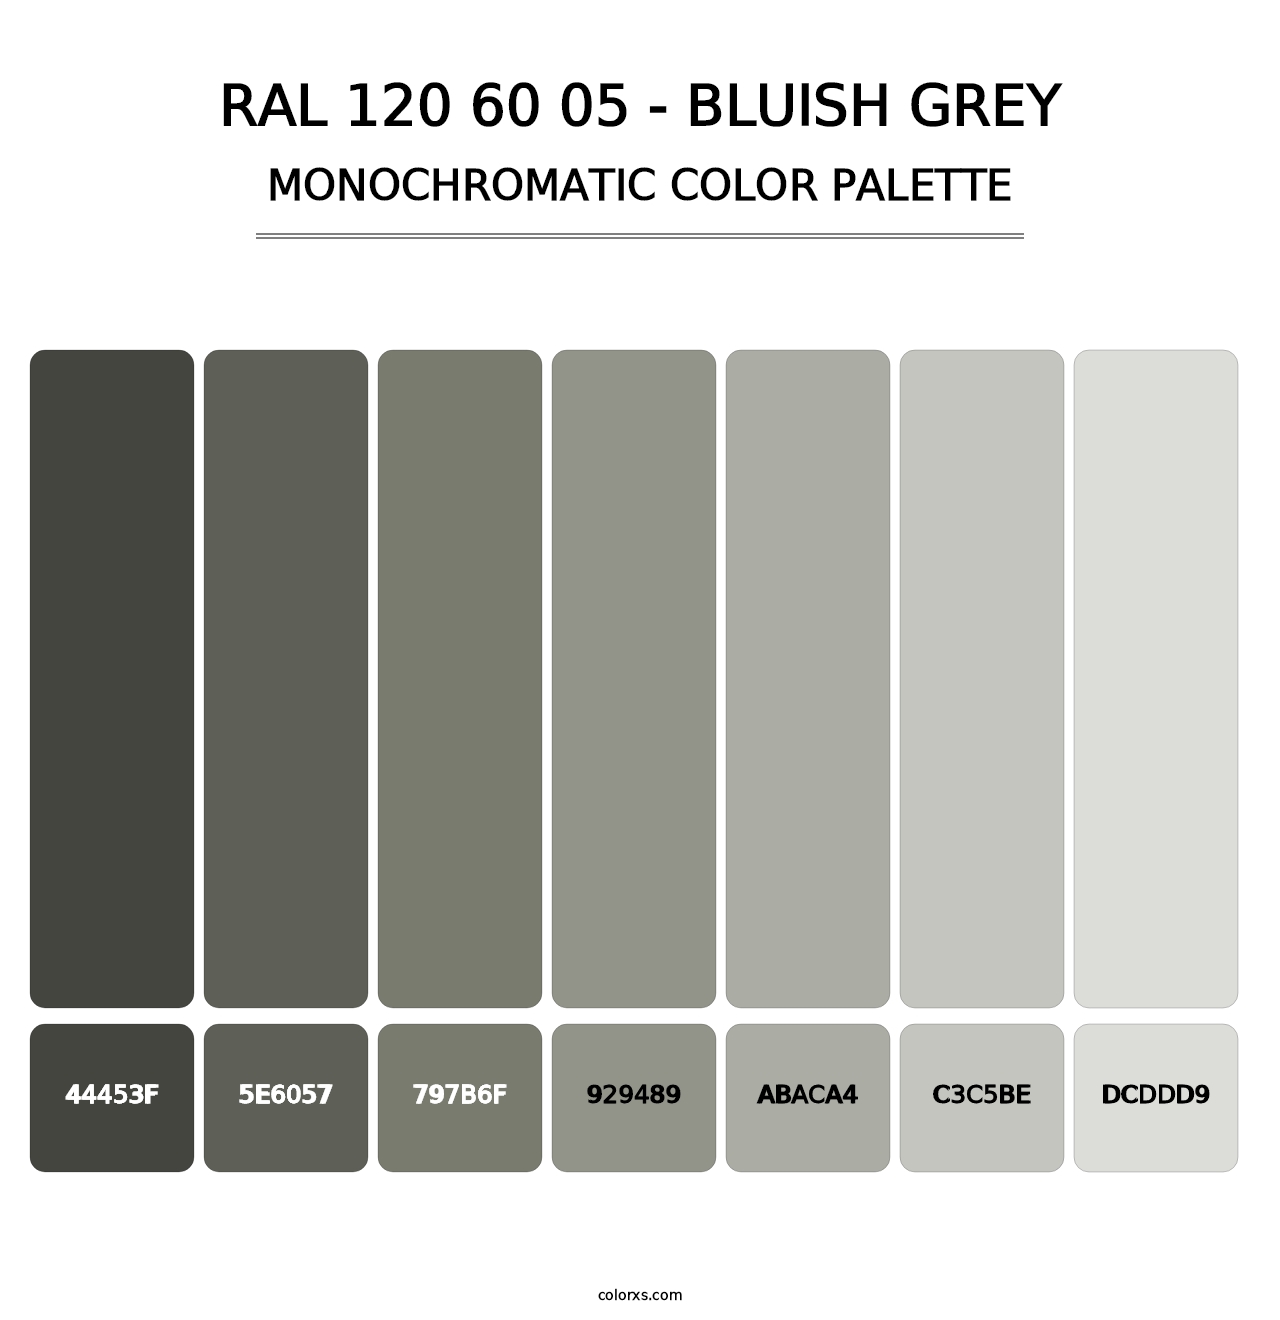 RAL 120 60 05 - Bluish Grey - Monochromatic Color Palette